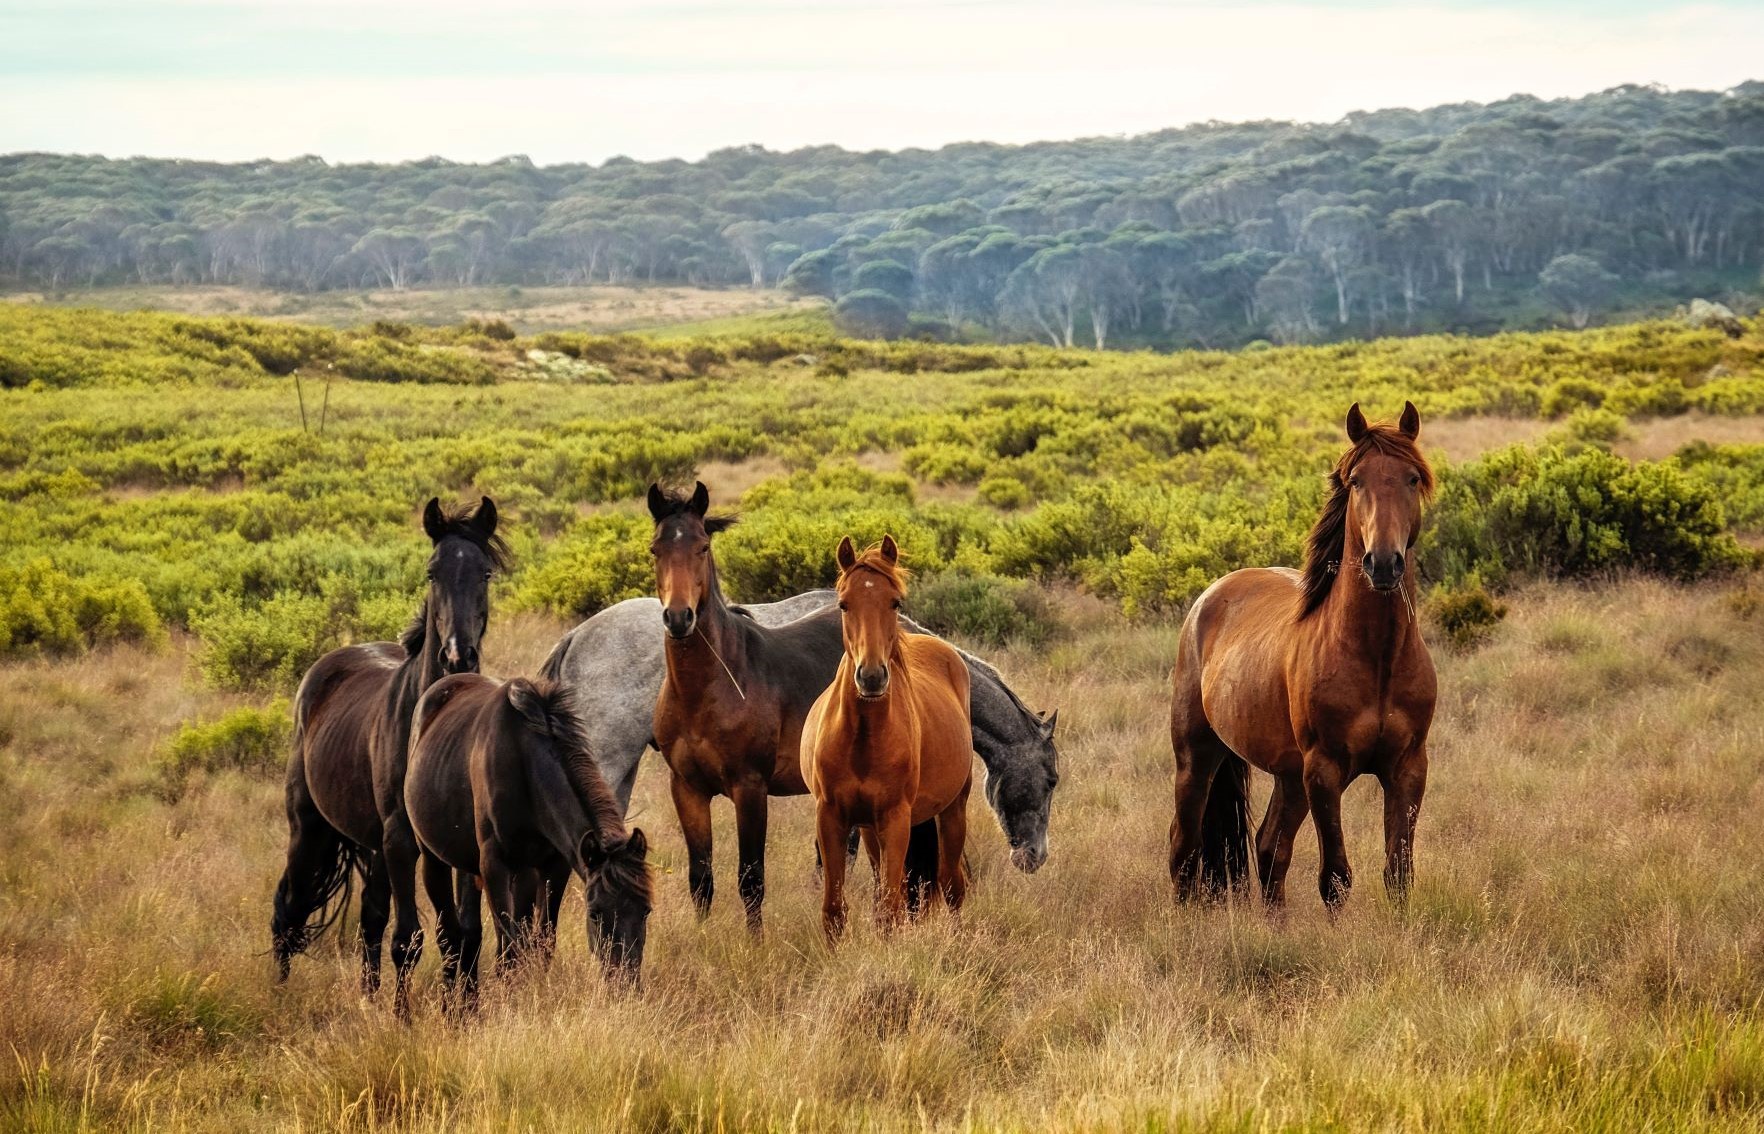 Last call for community wild horse advisory panel applications